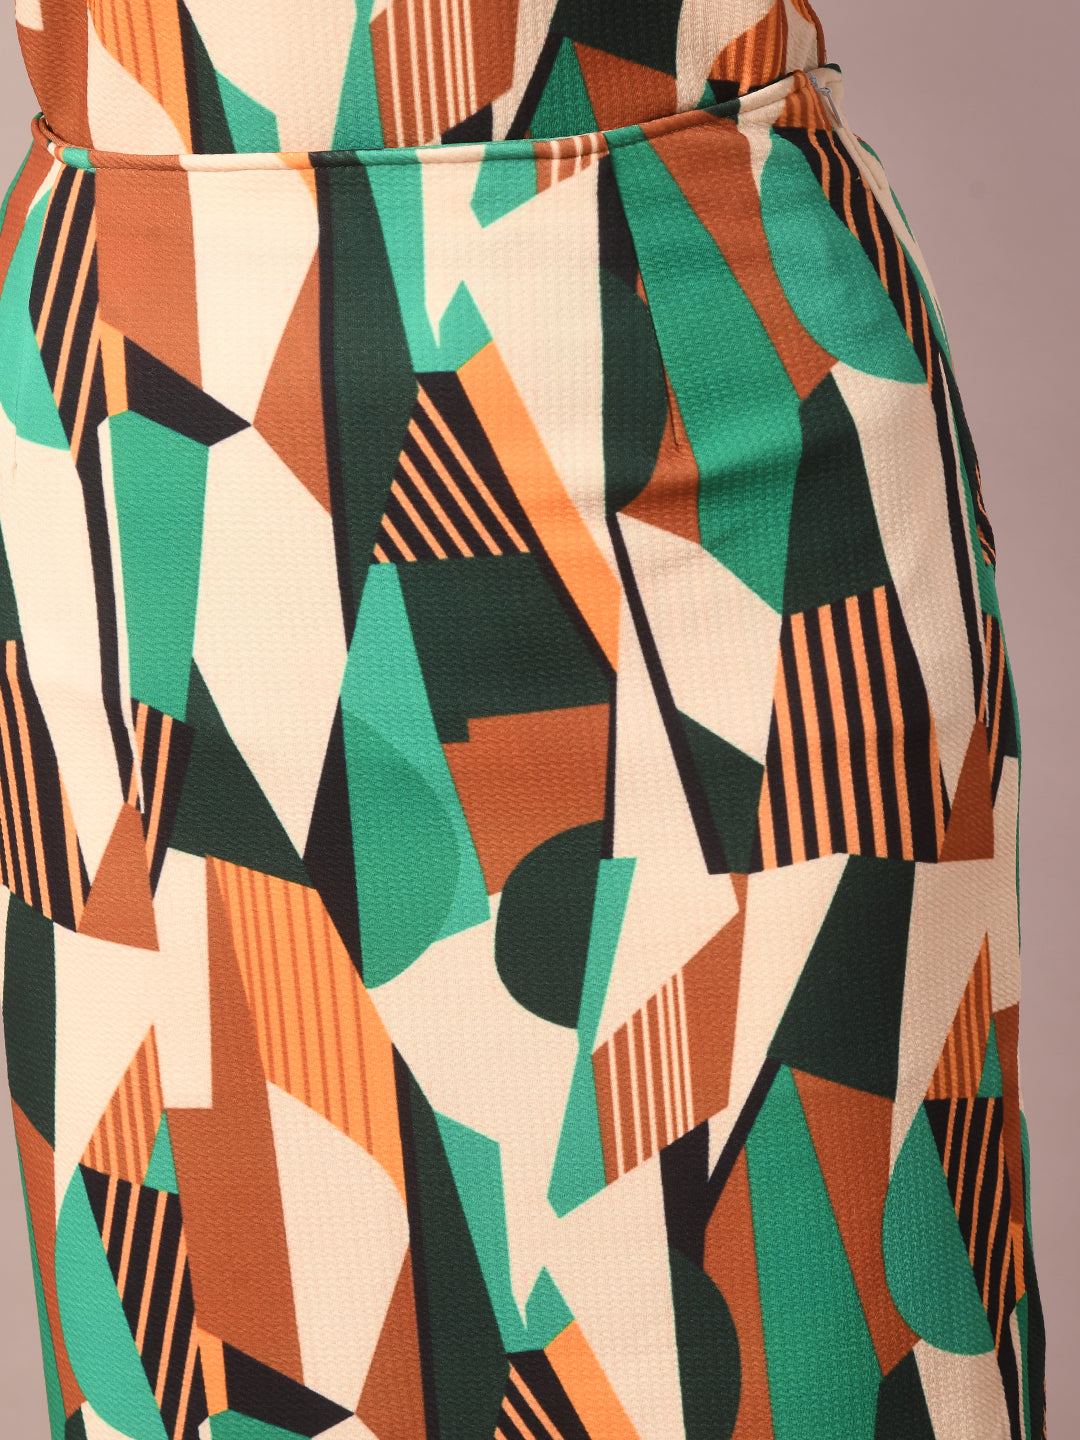 Women's  Multi Printed Knee Length Party Embellished Skirts   - Myshka